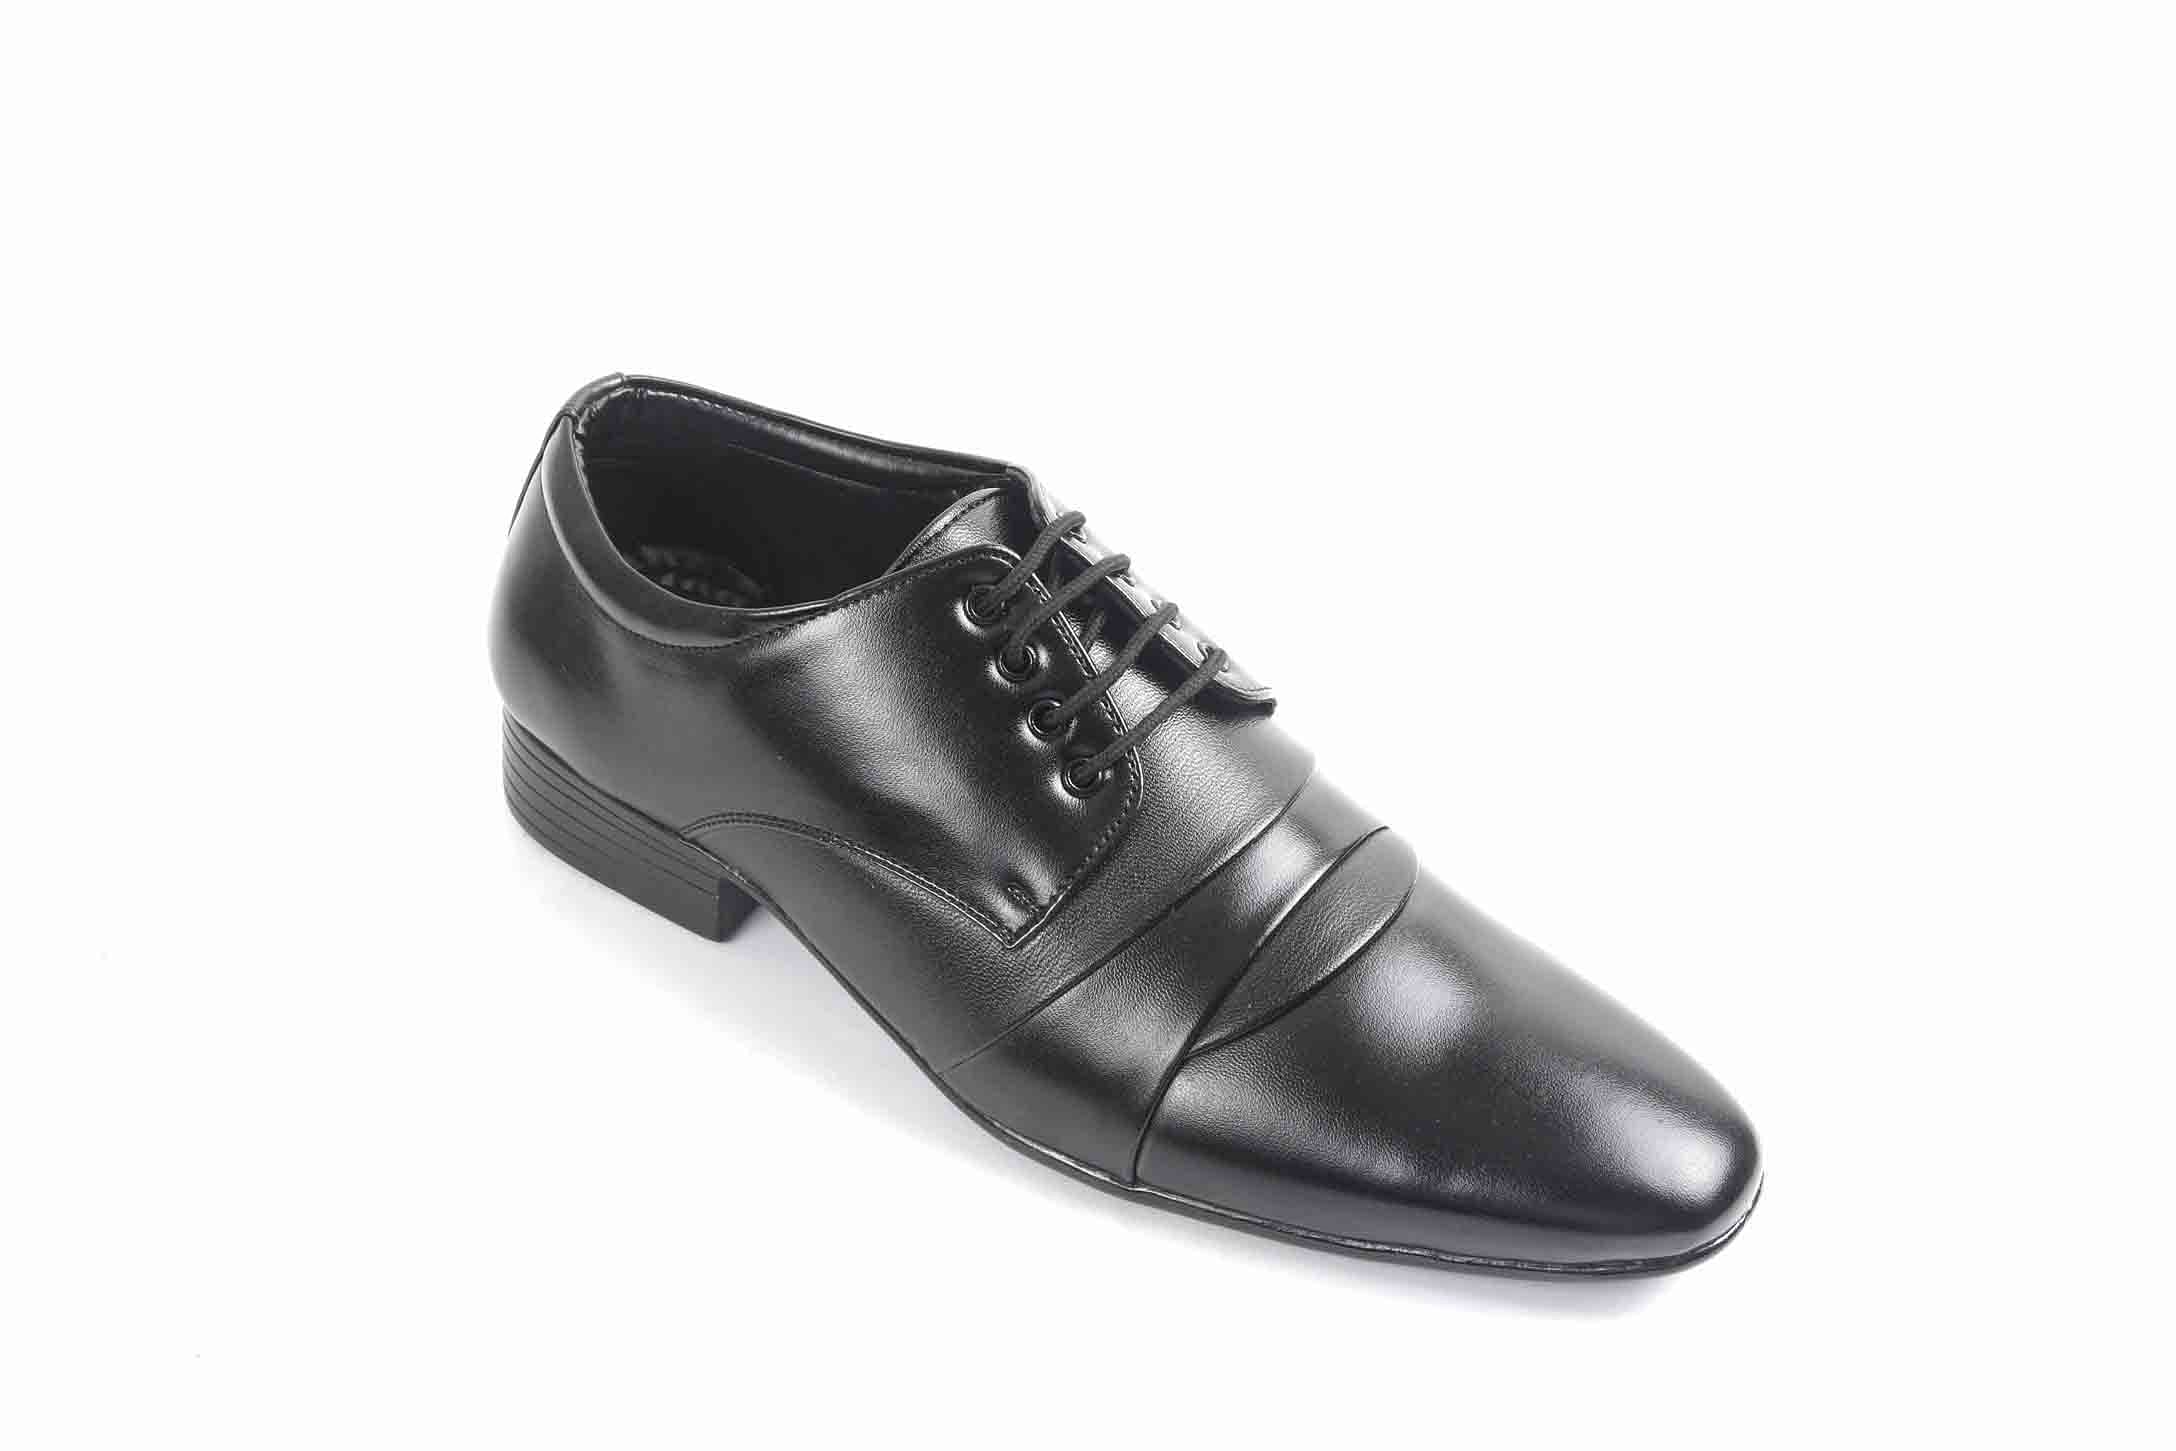 Pair-it Men derby Formal Shoes - Black - LZ-RYDER103